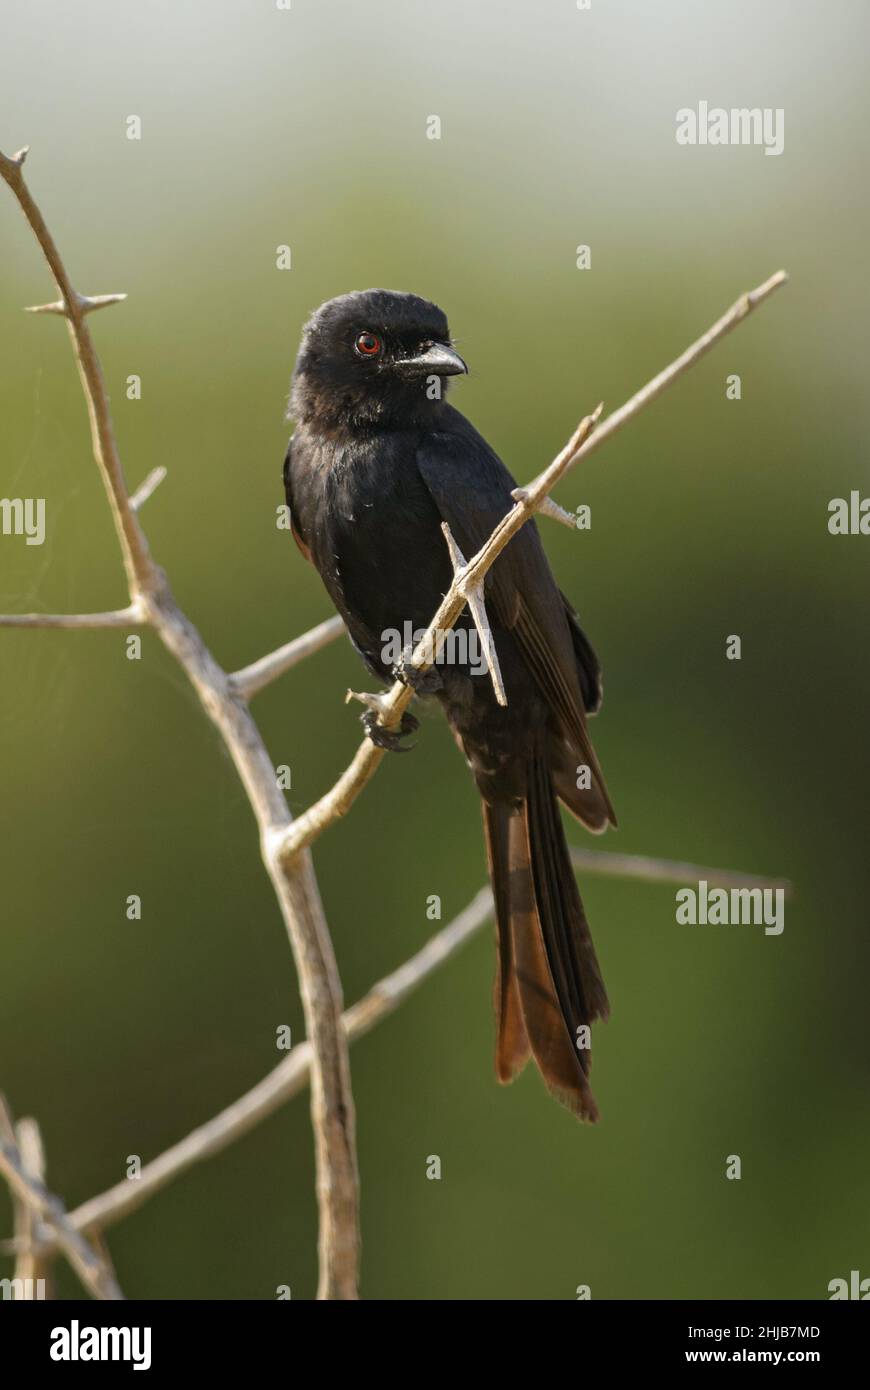 Gabelschwanz-Drongo - Dicrurus adsimilis, schöner schwarzer Langschwanz-Barschvögel aus afrikanischen Büschen, Tsavo West, Kenia. Stockfoto